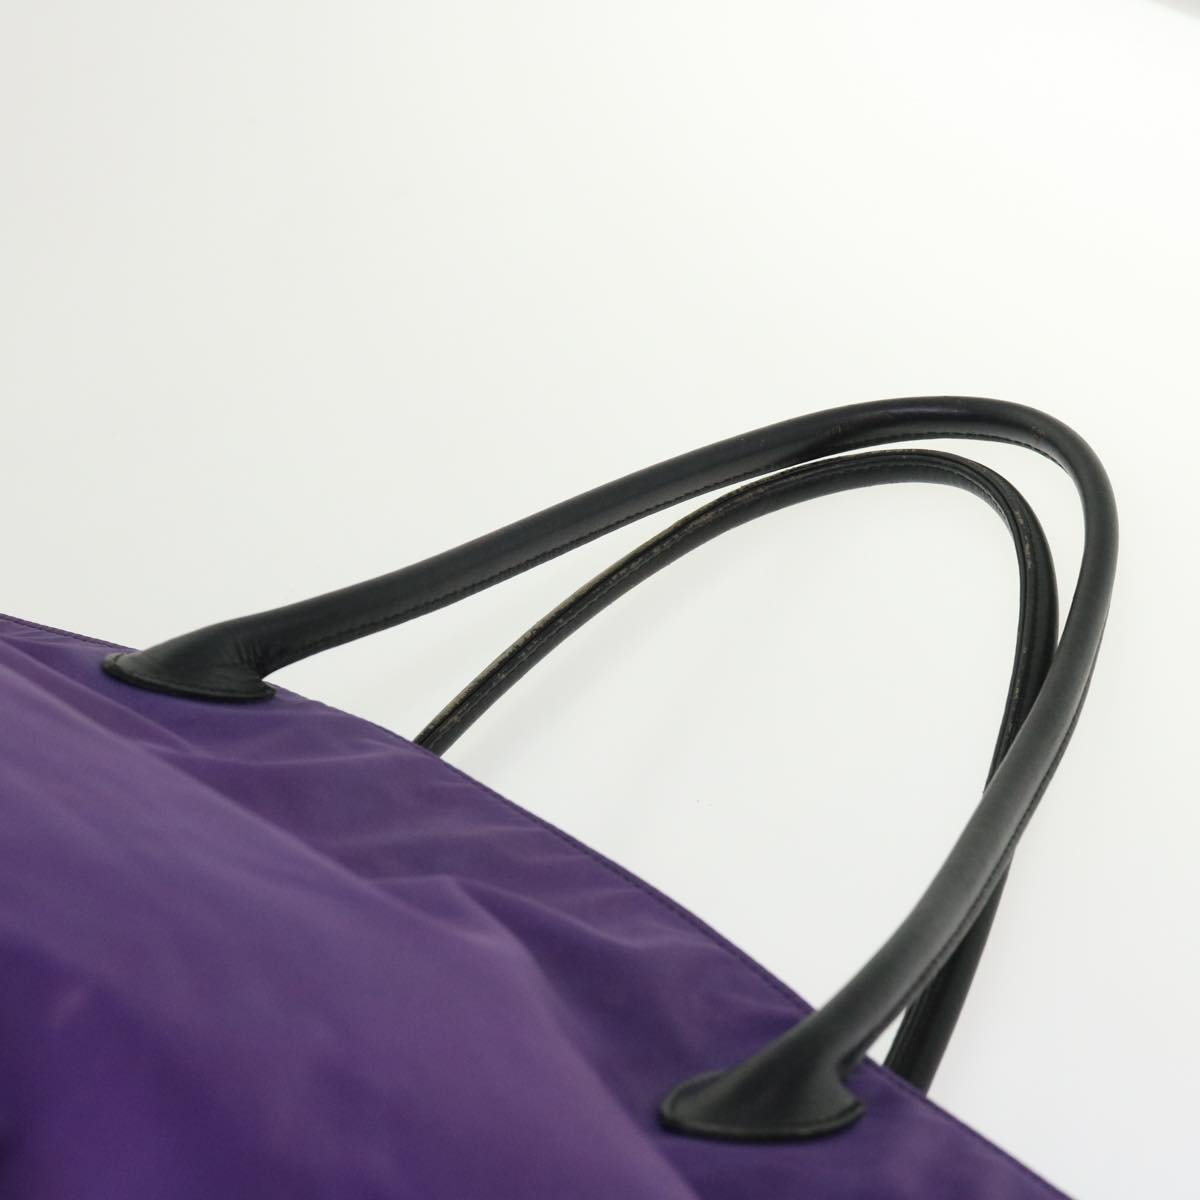 Burberrys Nova Check Tote Bag Nylon Purple Auth cl623